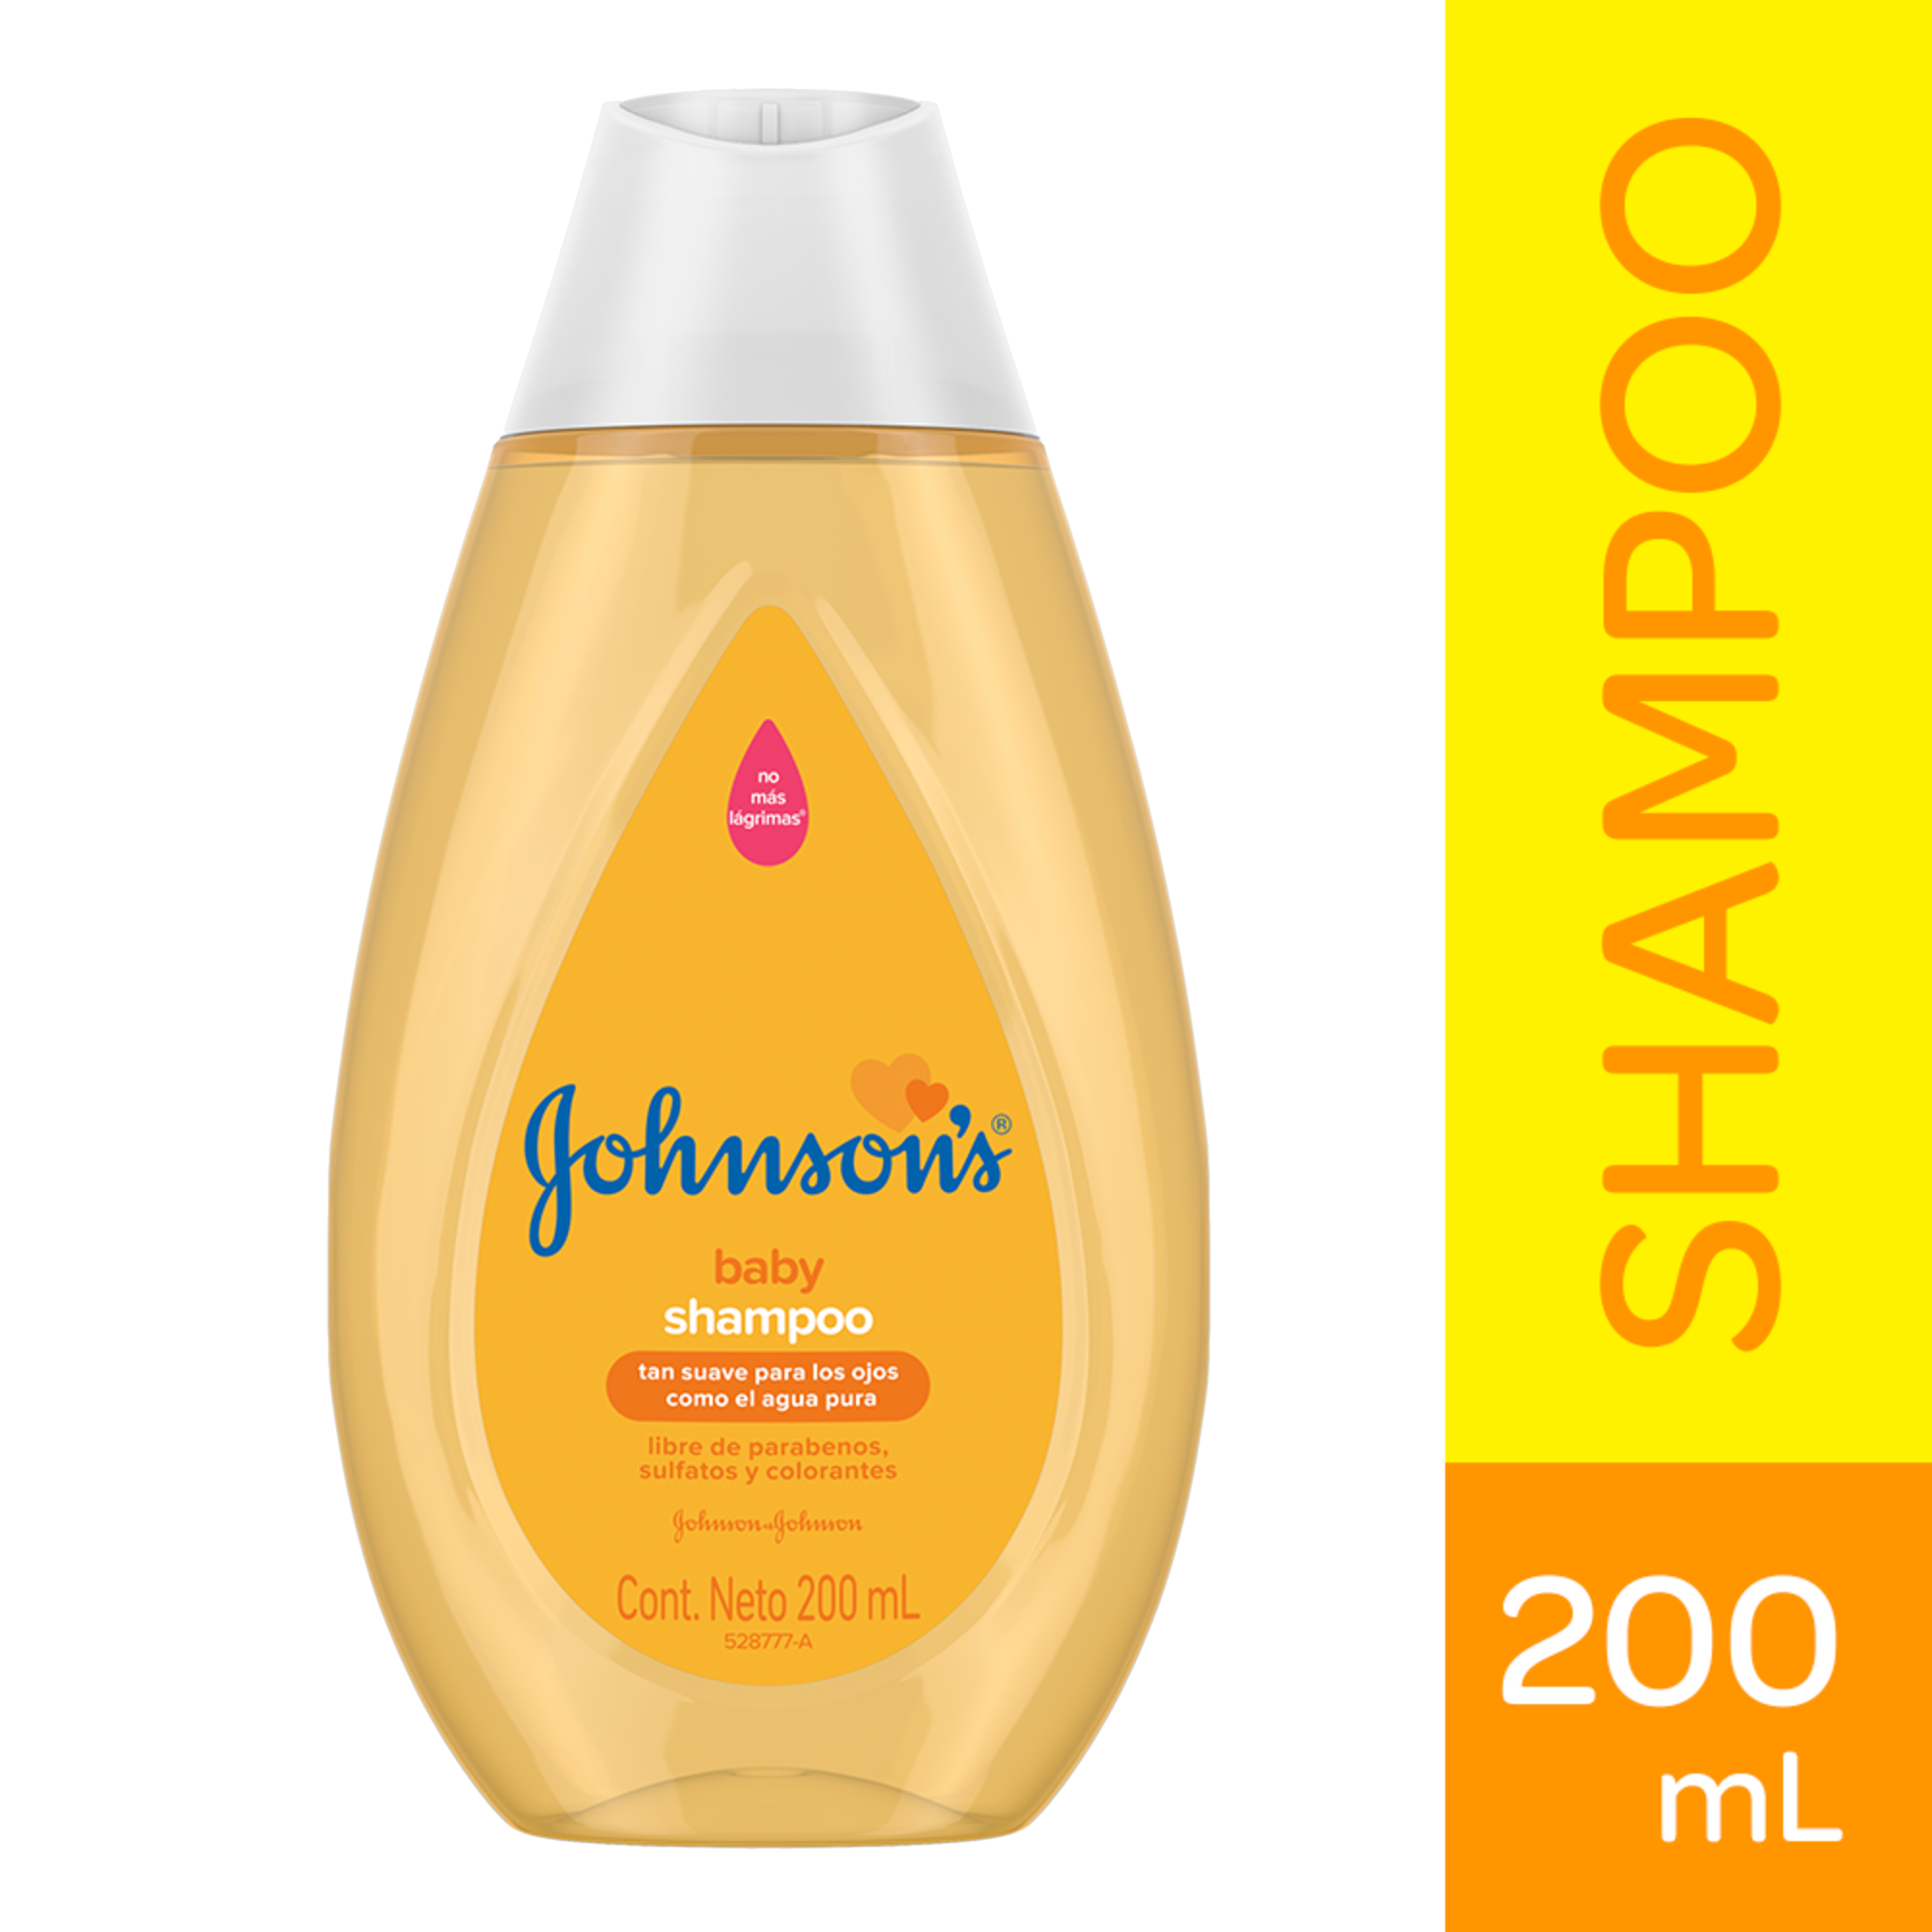 Shampoo Johnson’S Baby Original x200ml